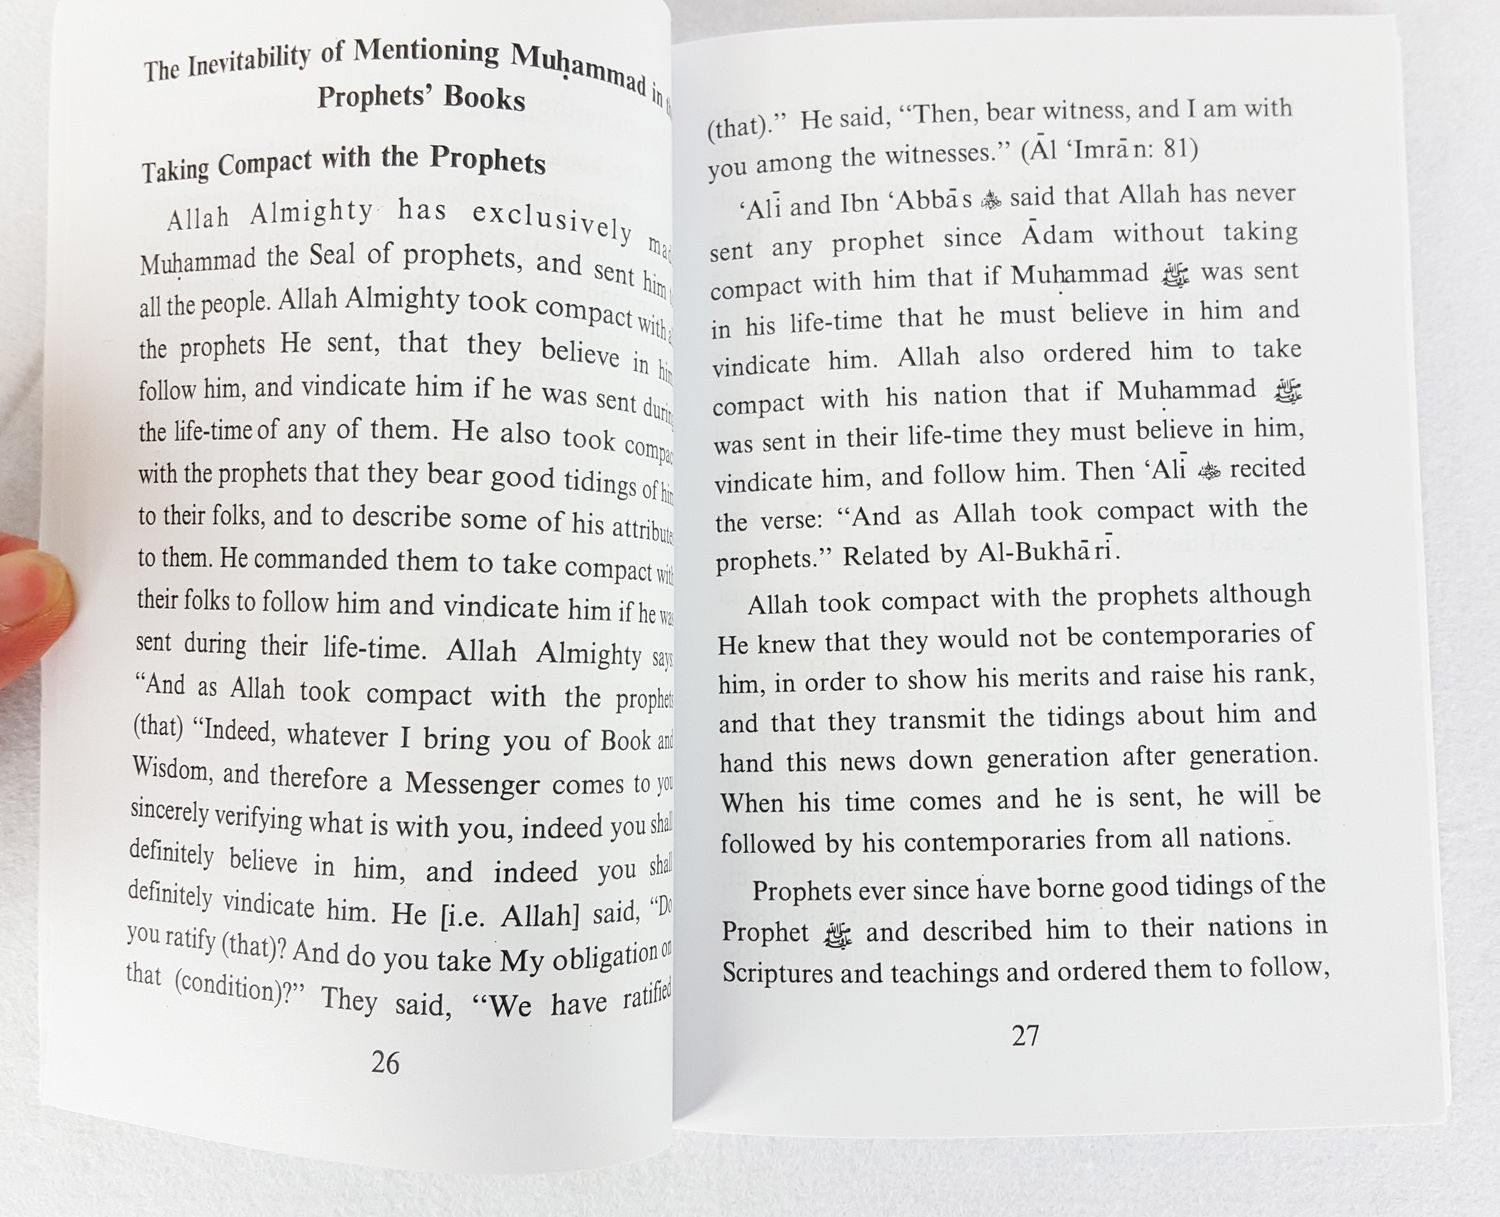 Biblical Prophecies of Mohammad (English)  from Dar-Alsalam - Arabian Shopping Zone